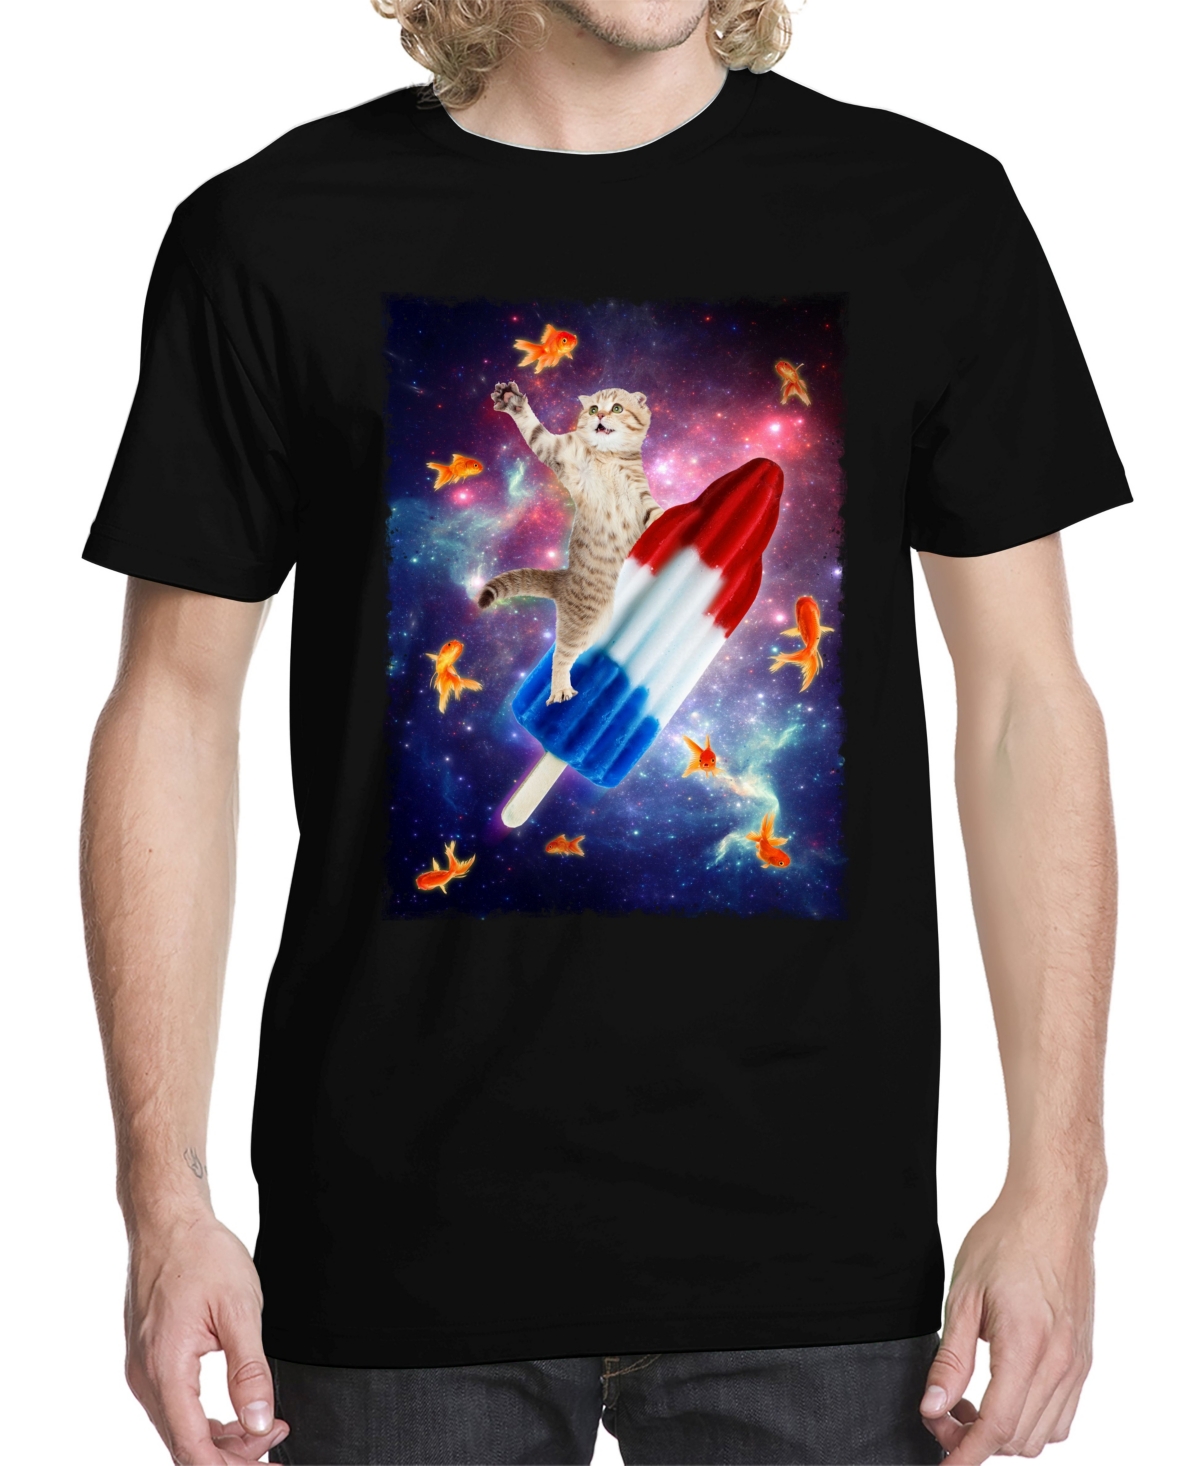 Men's Rocket Cat Graphic T-shirt - Black